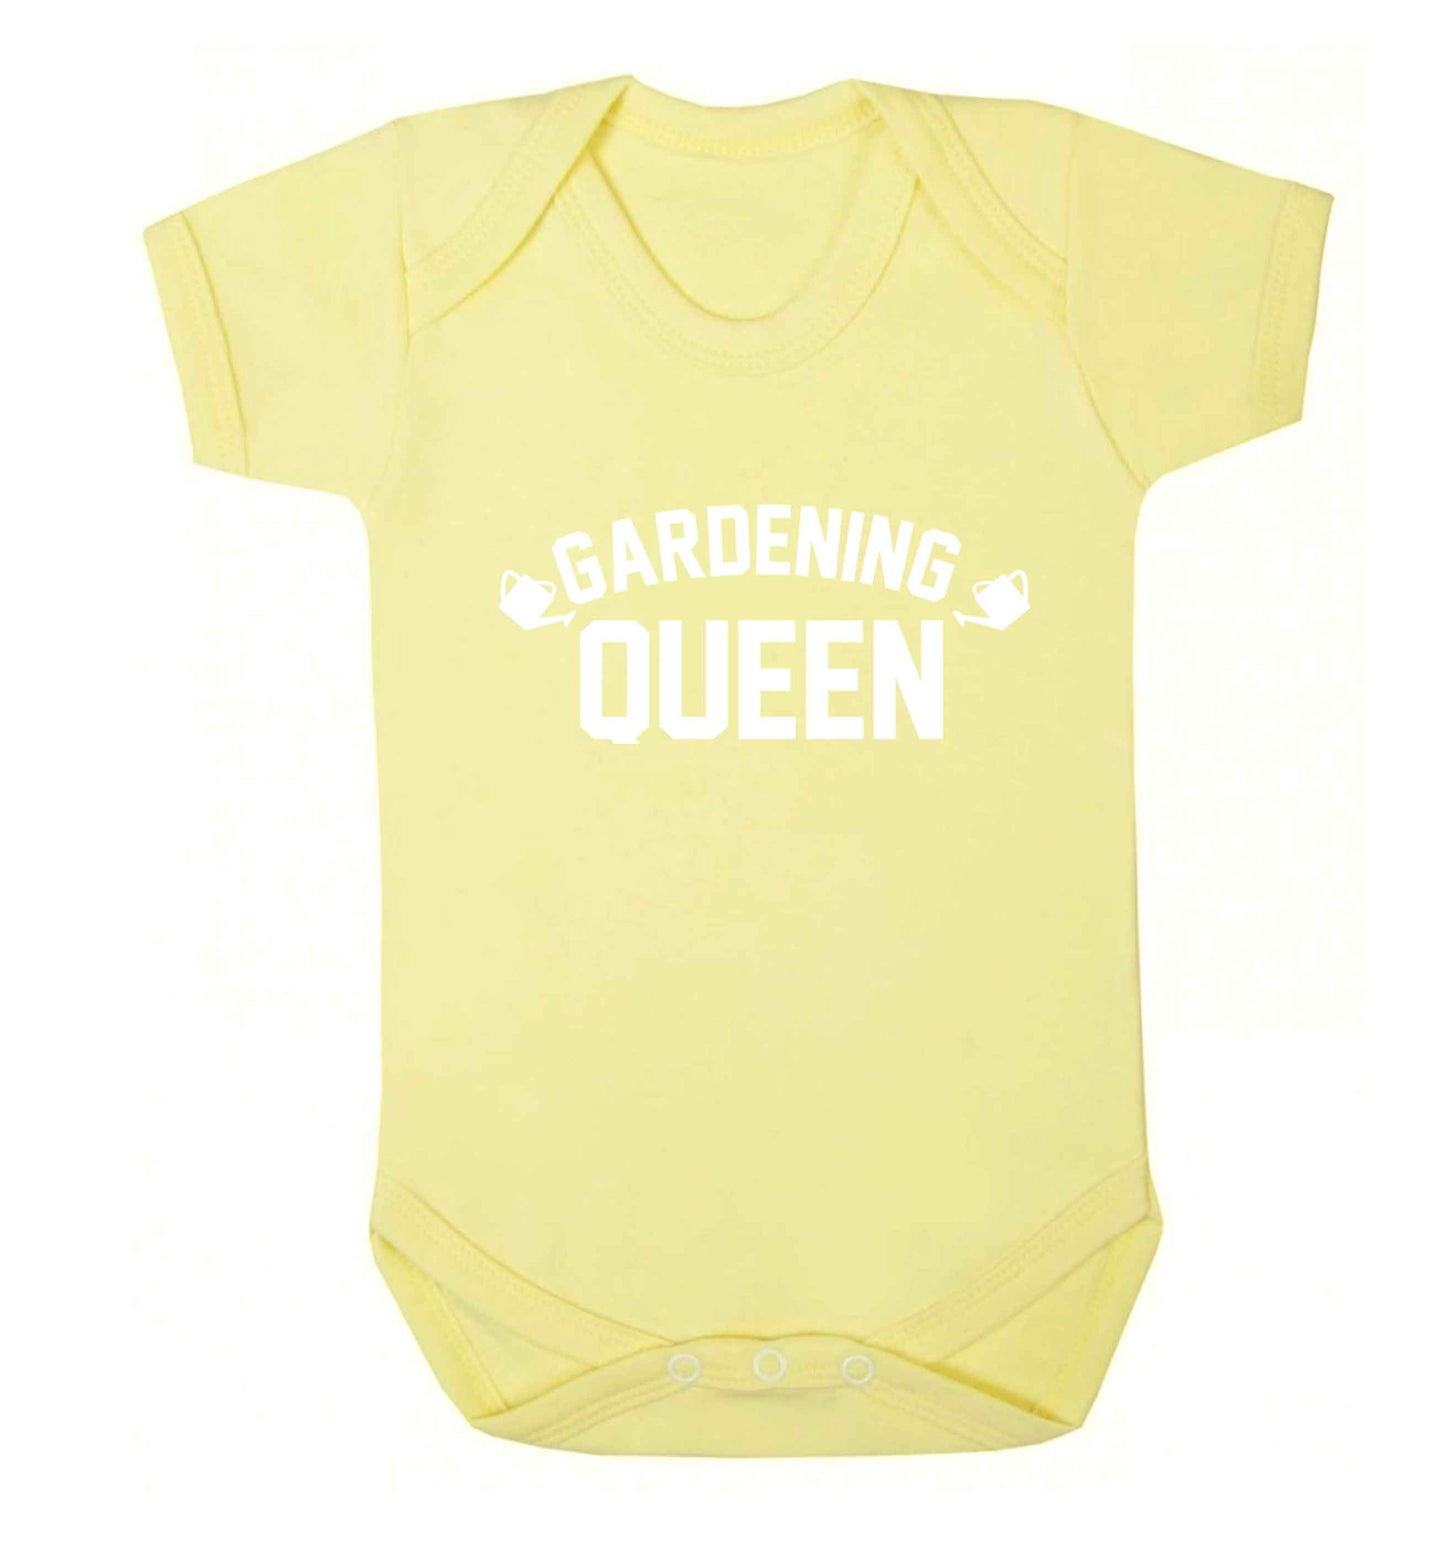 Gardening queen Baby Vest pale yellow 18-24 months